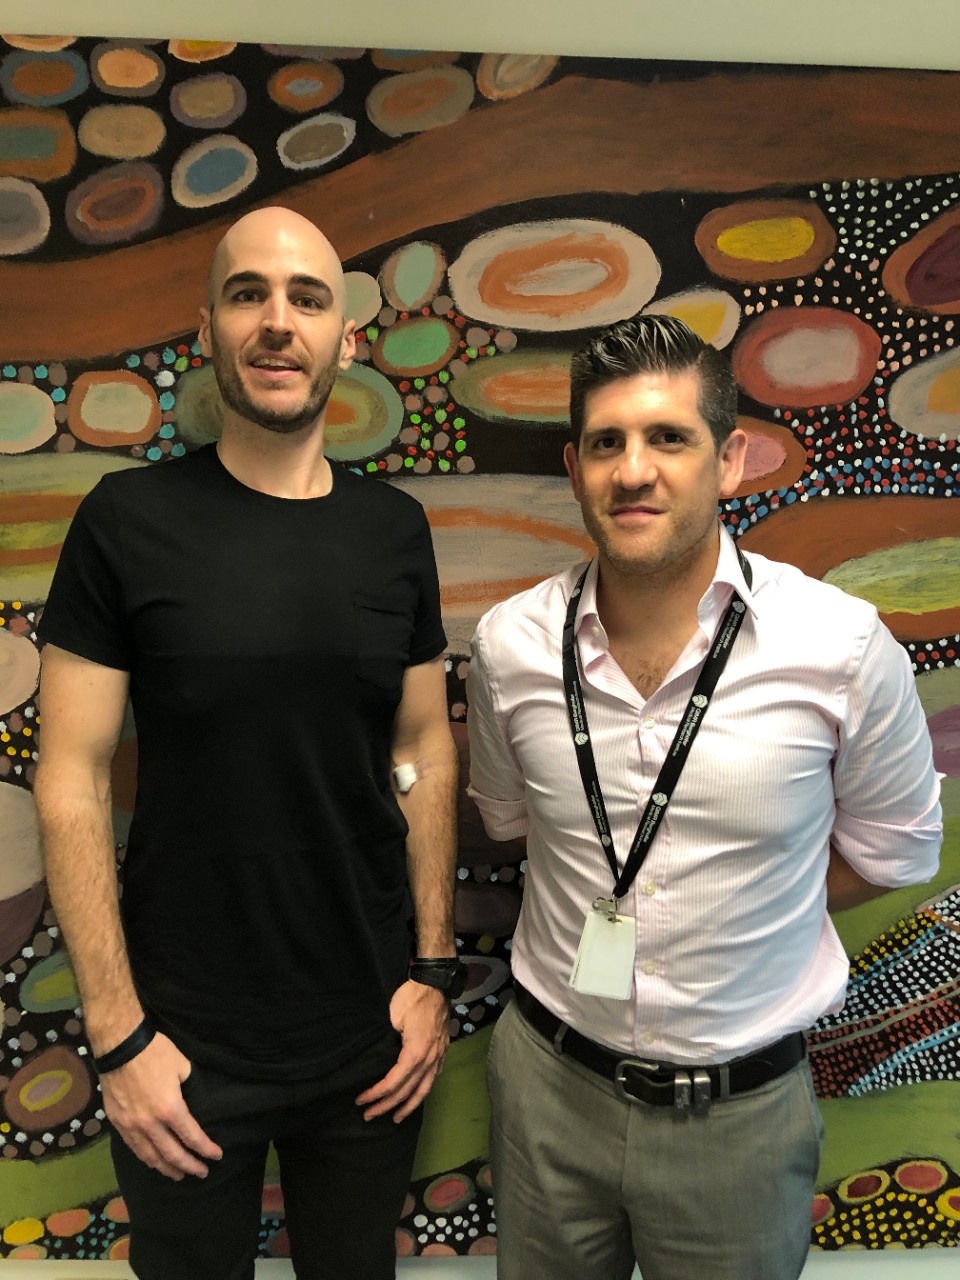 Australian Tourette's patients standing next to cannabis researcher in Australia